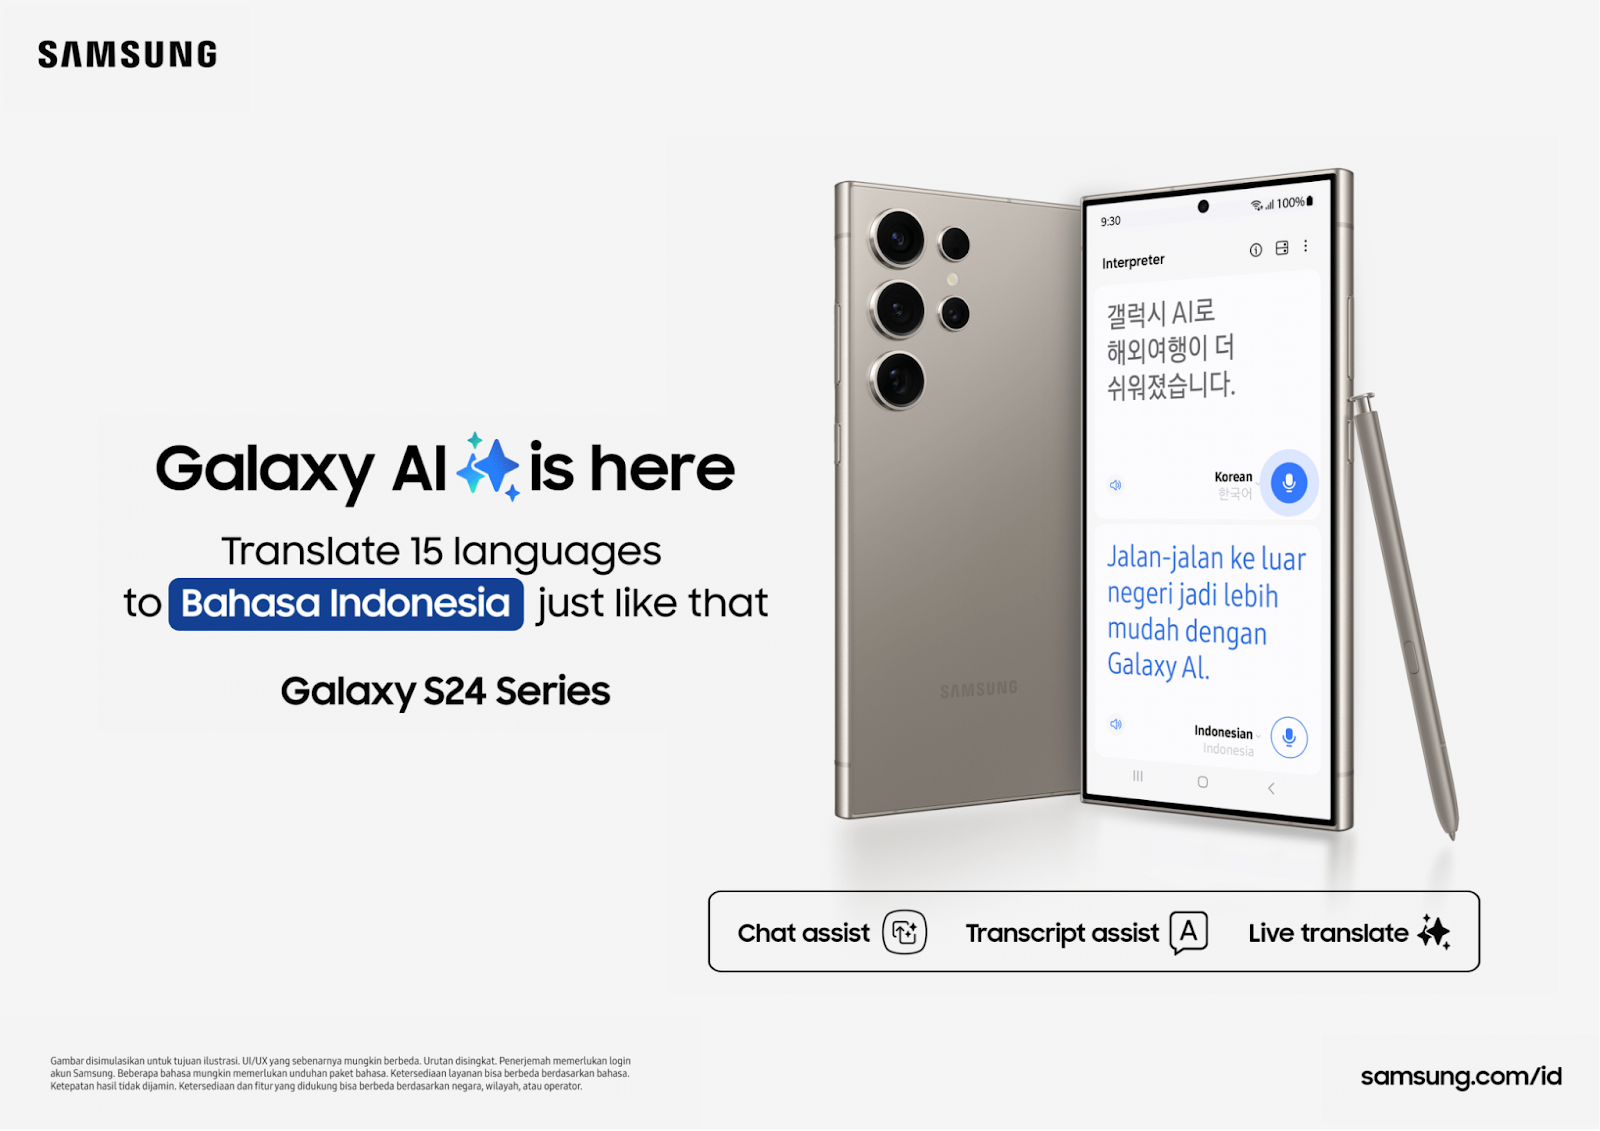 Opsi Bahasa Indonesia di Galaxy AI, Memberi Kemudahan Lebih Bagi Pengguna  Galaxy S24 Series 